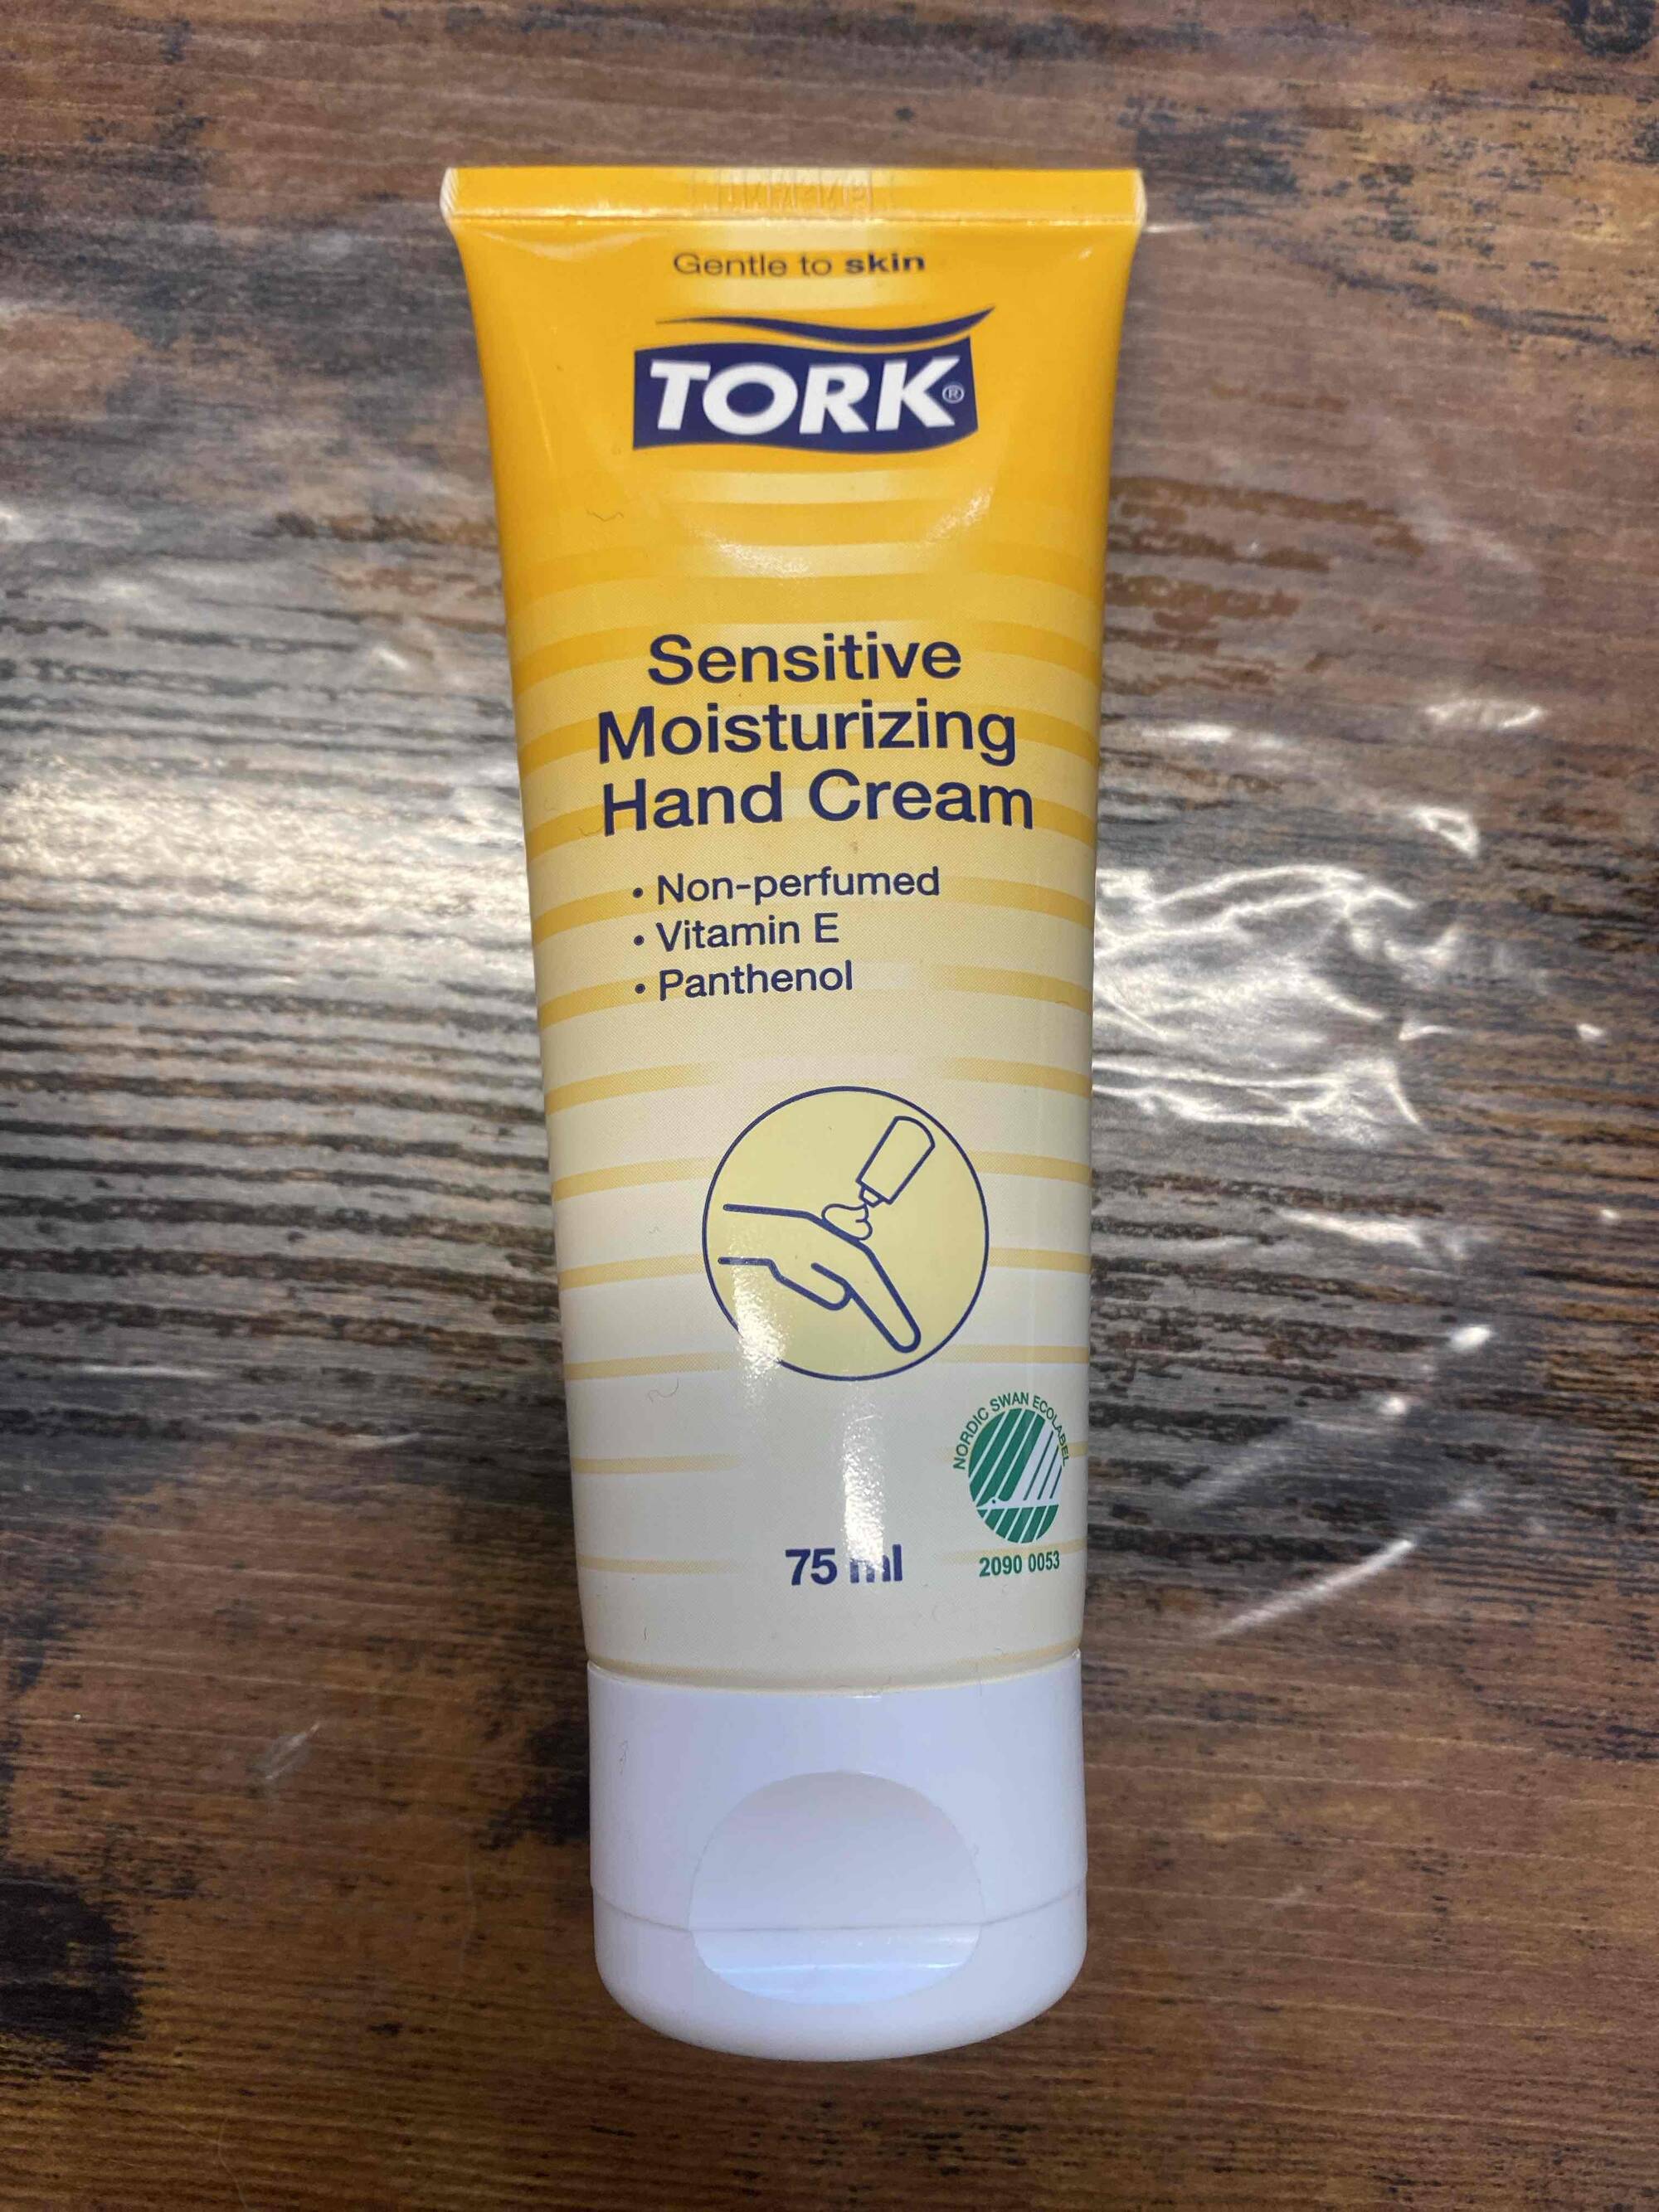 TORK - Sensitive moisturizing hand cream